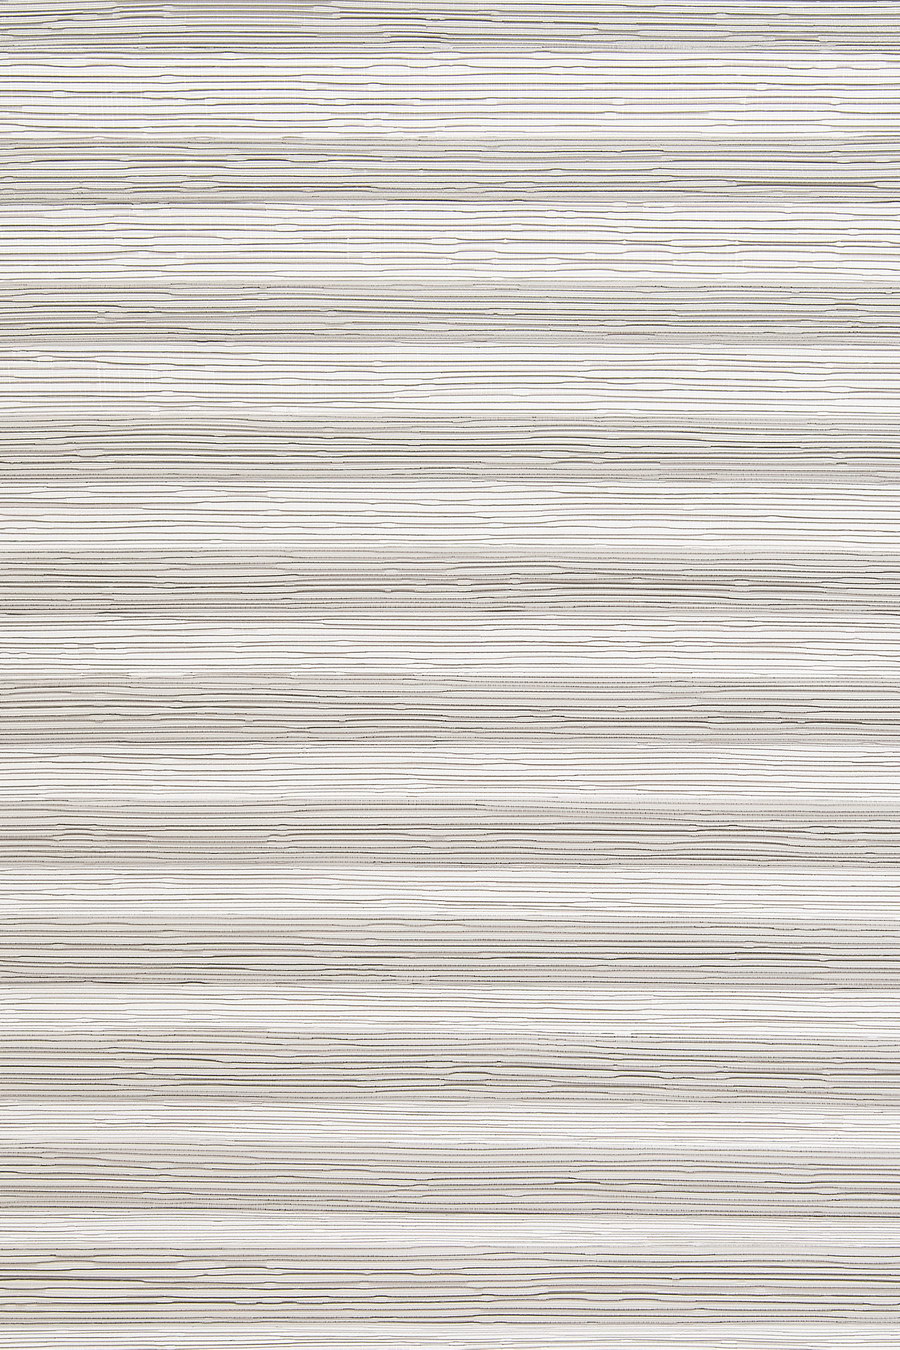 Ткань MIRROR white-wood 30095 для штор плиссе